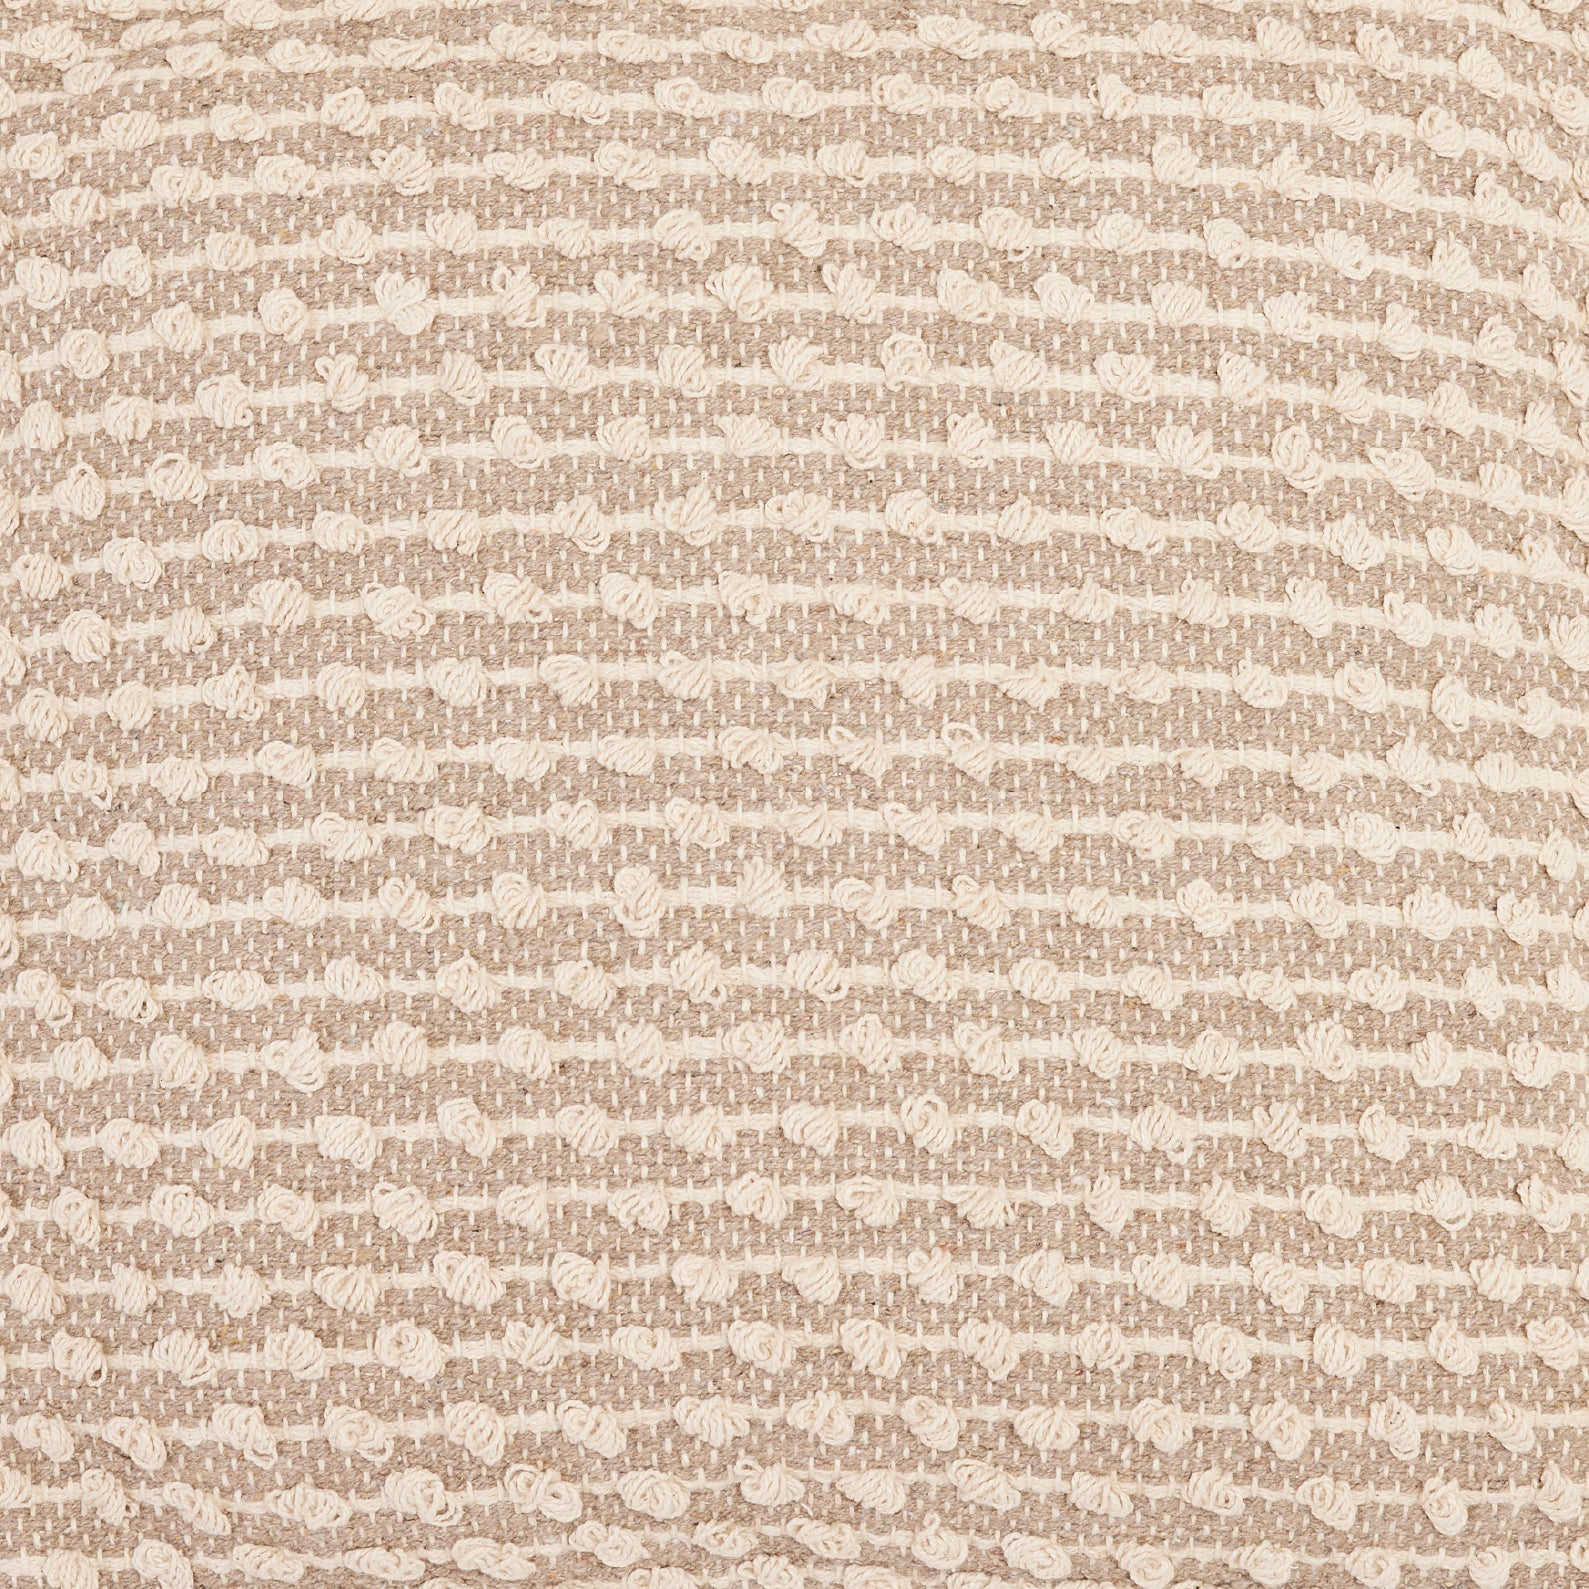 Light Beige Hand-Woven Cotton Cushion | หมอนอิงพร้อมปลอก